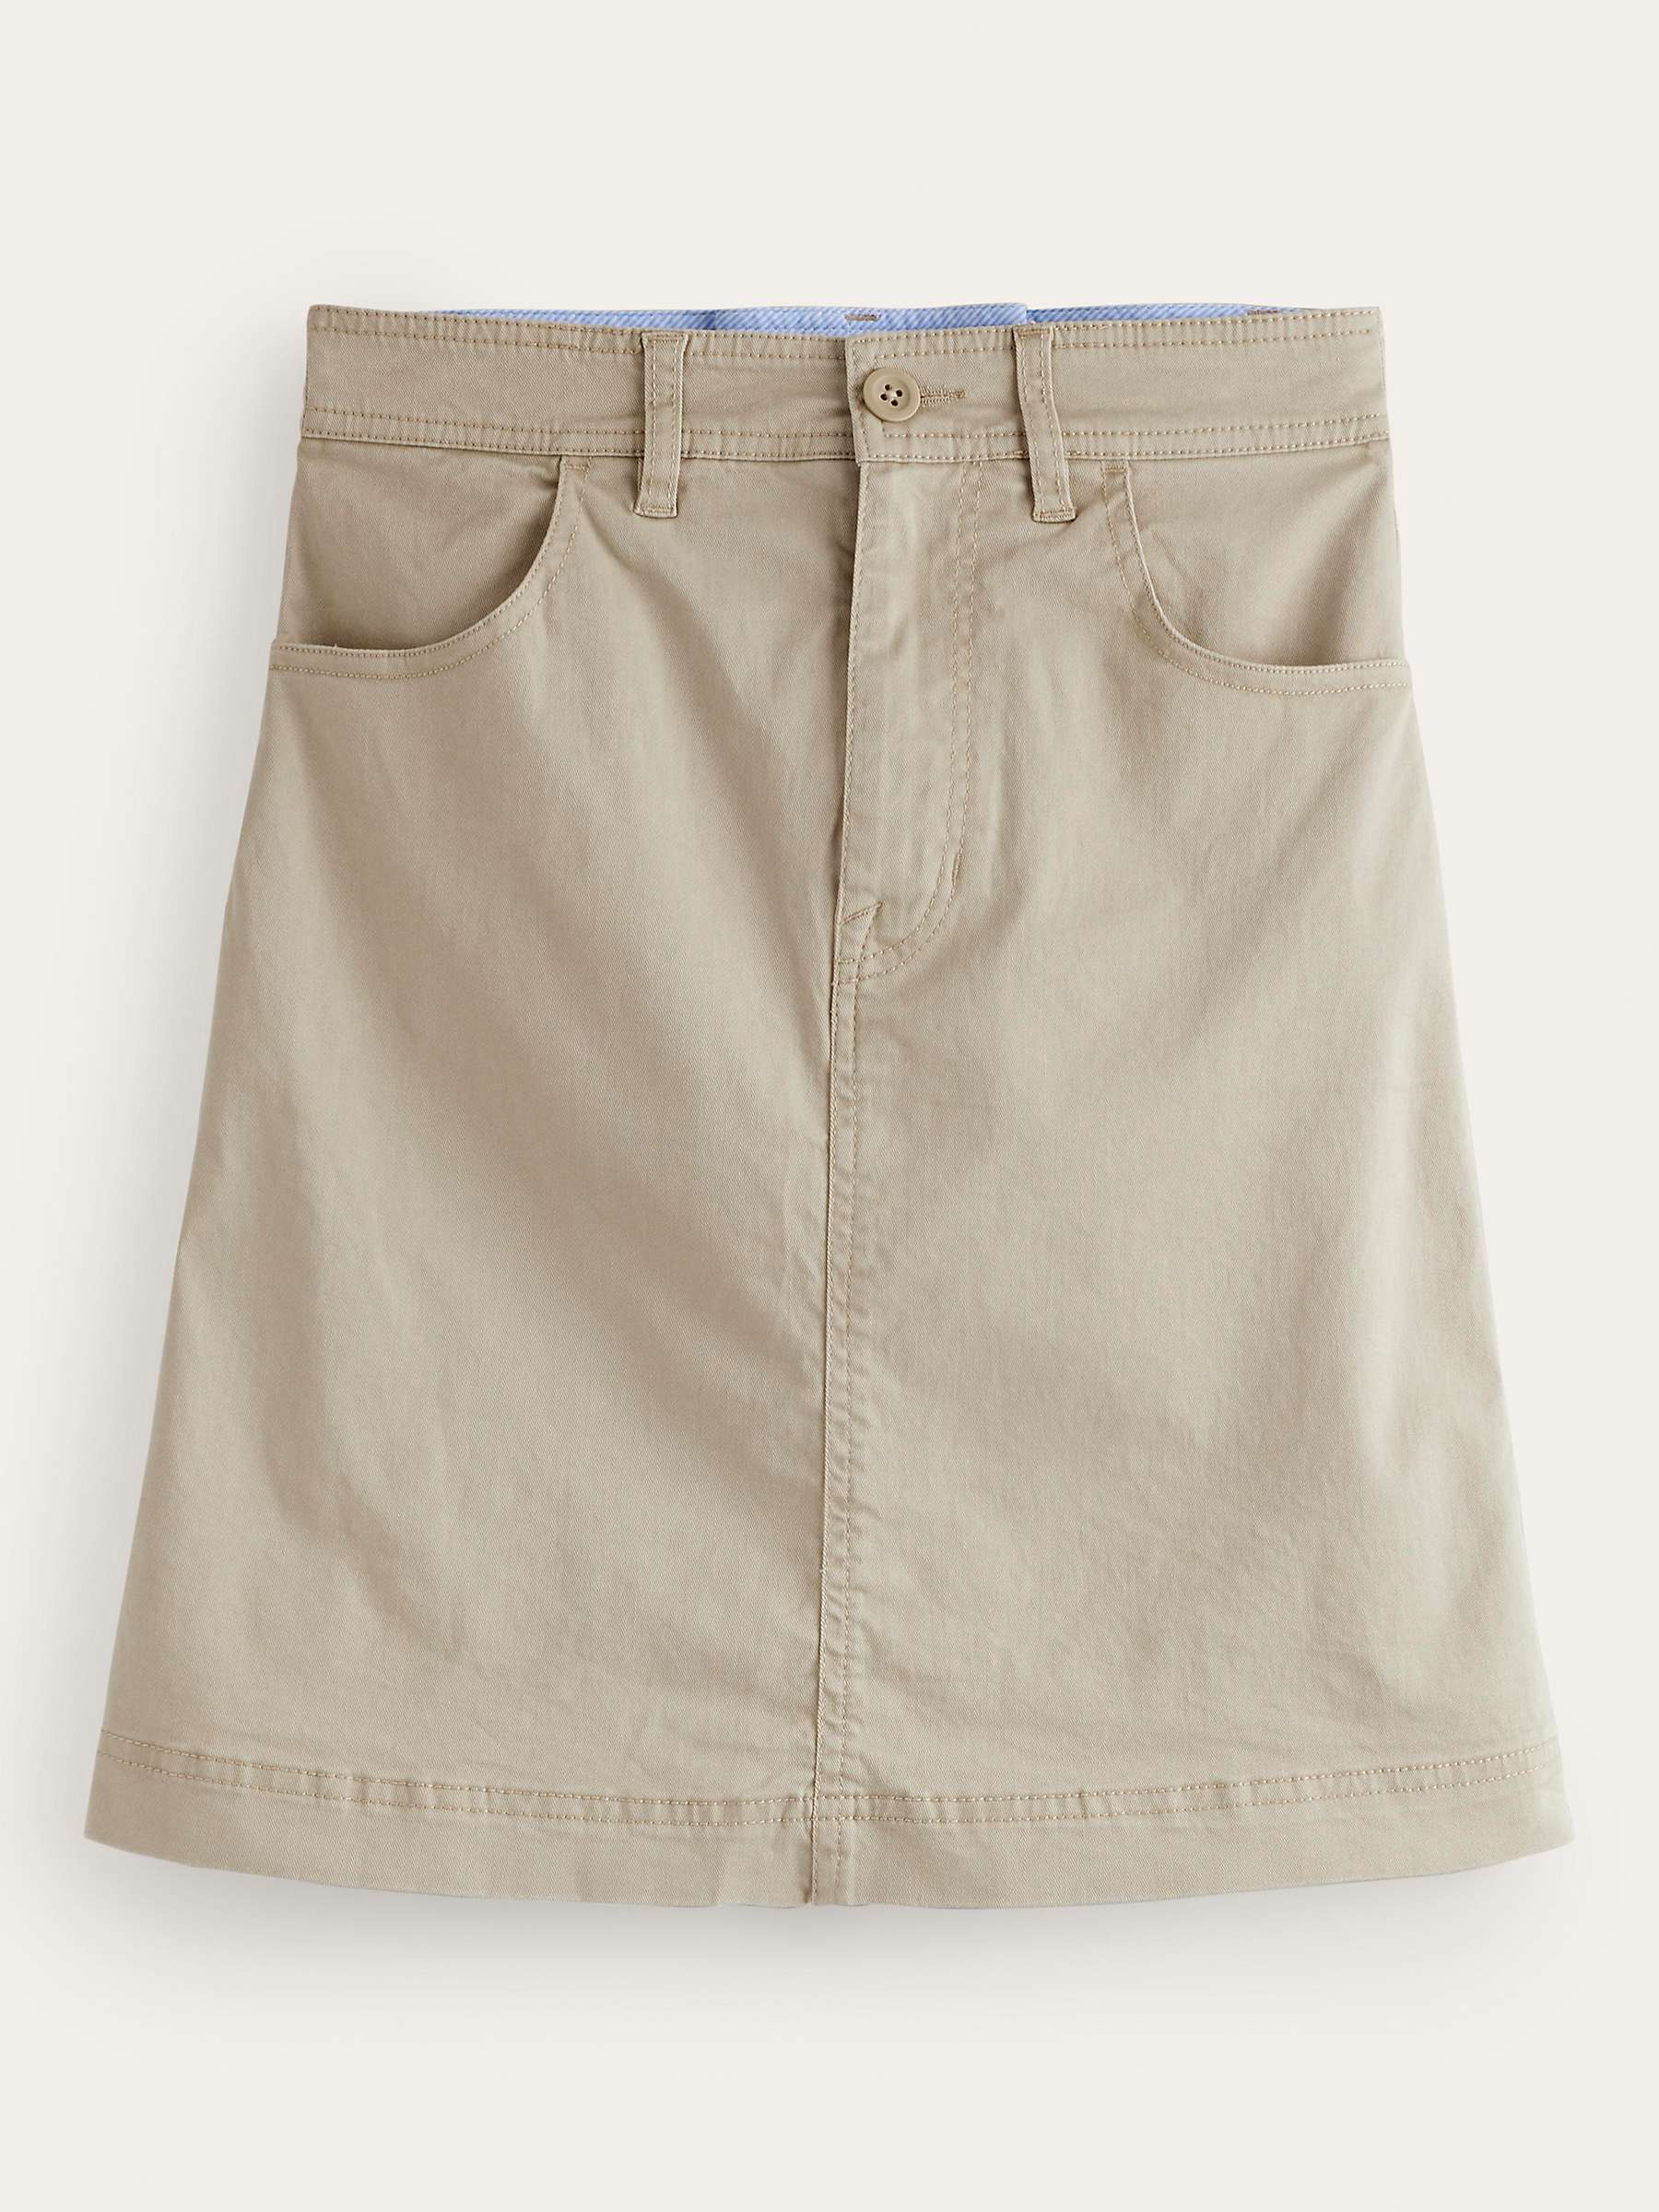 Buy Boden Nell Cotton Blend Chino Mini Skirt, Neutral Online at johnlewis.com